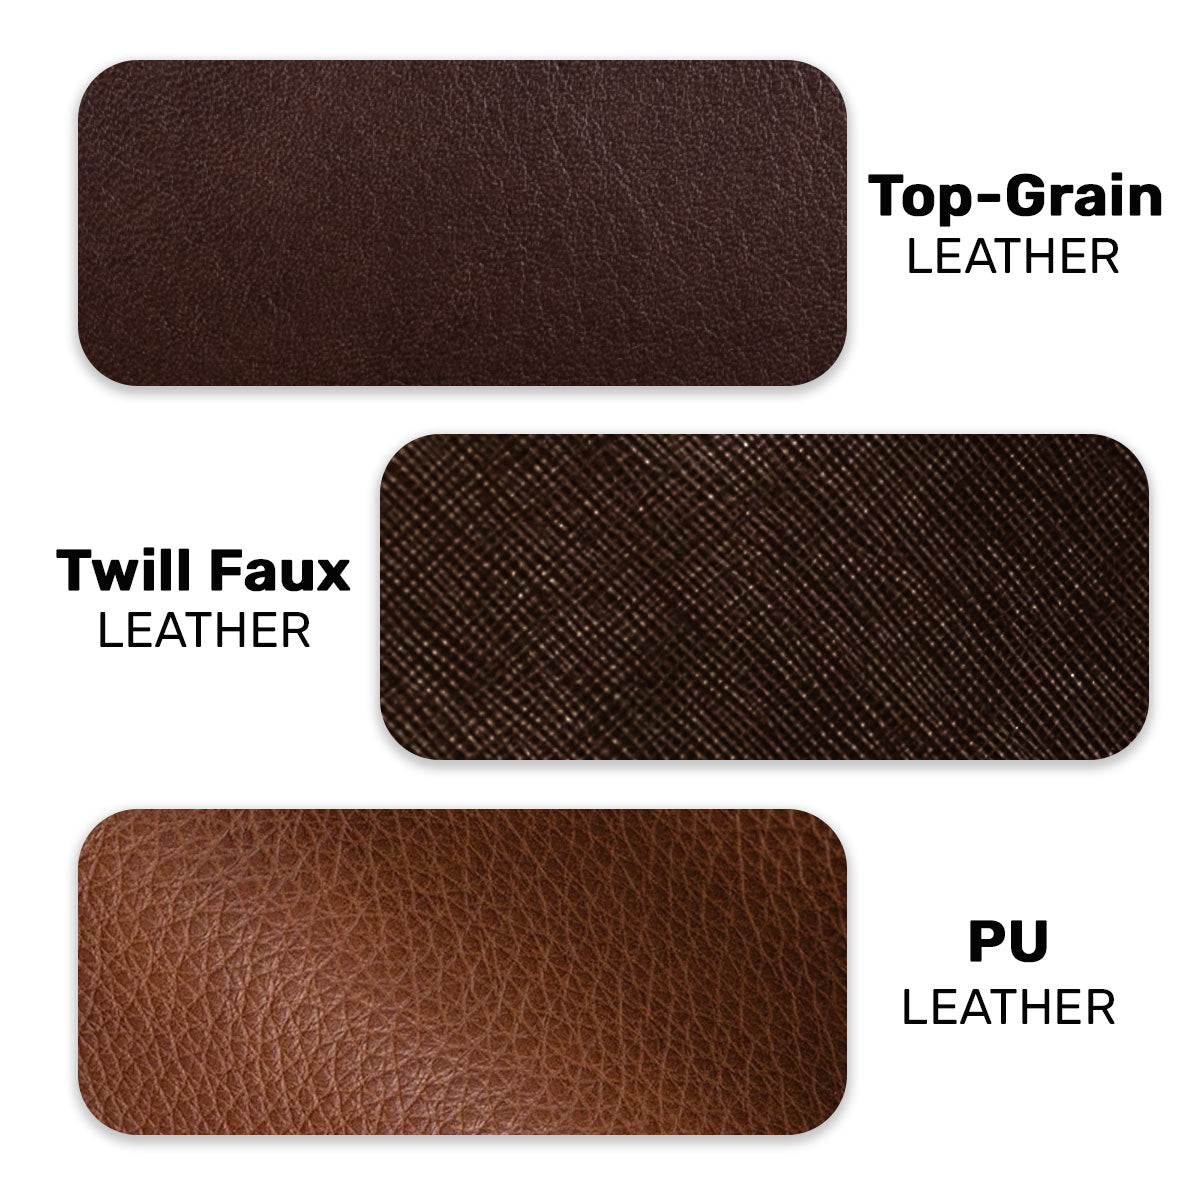 God Says You Are - Personalized Leather Handbag MB32 Medium / PU Leather